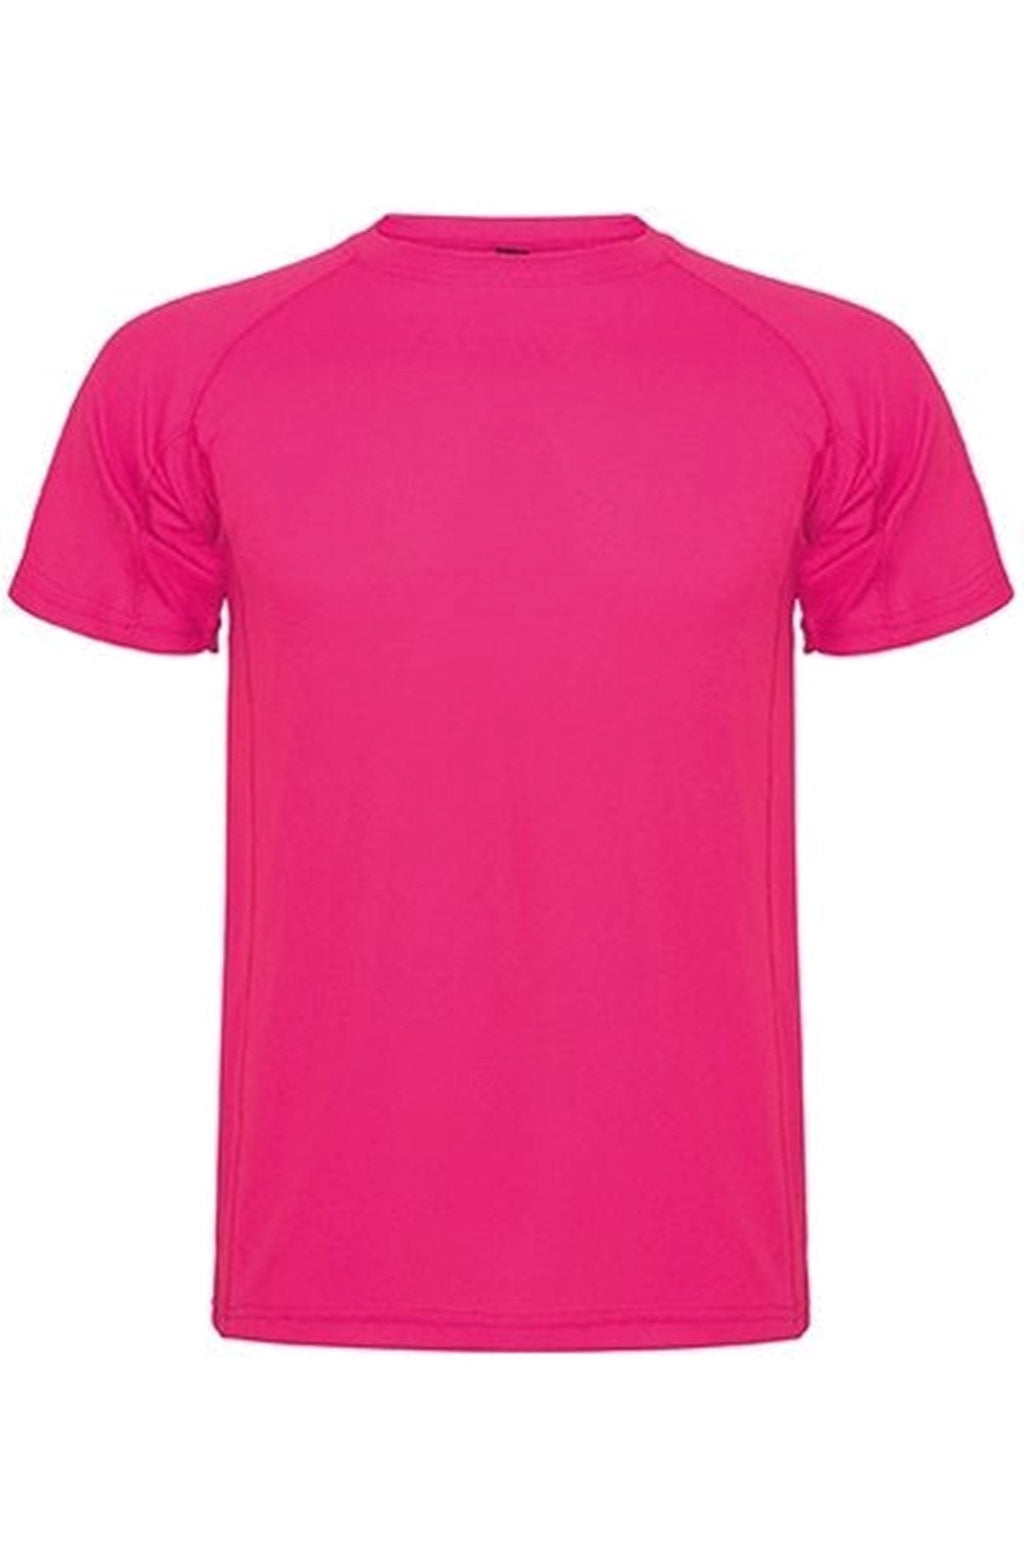 Training T-shirt - Pink